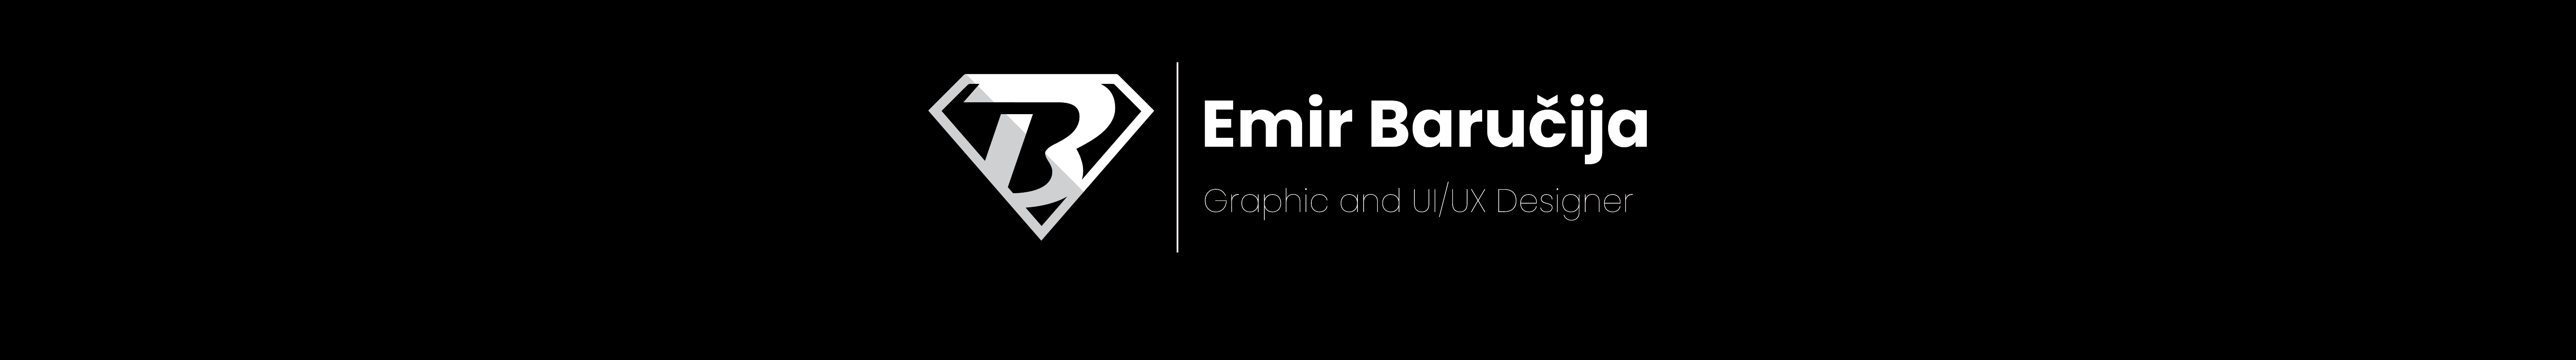 Emir Barucija's profile banner